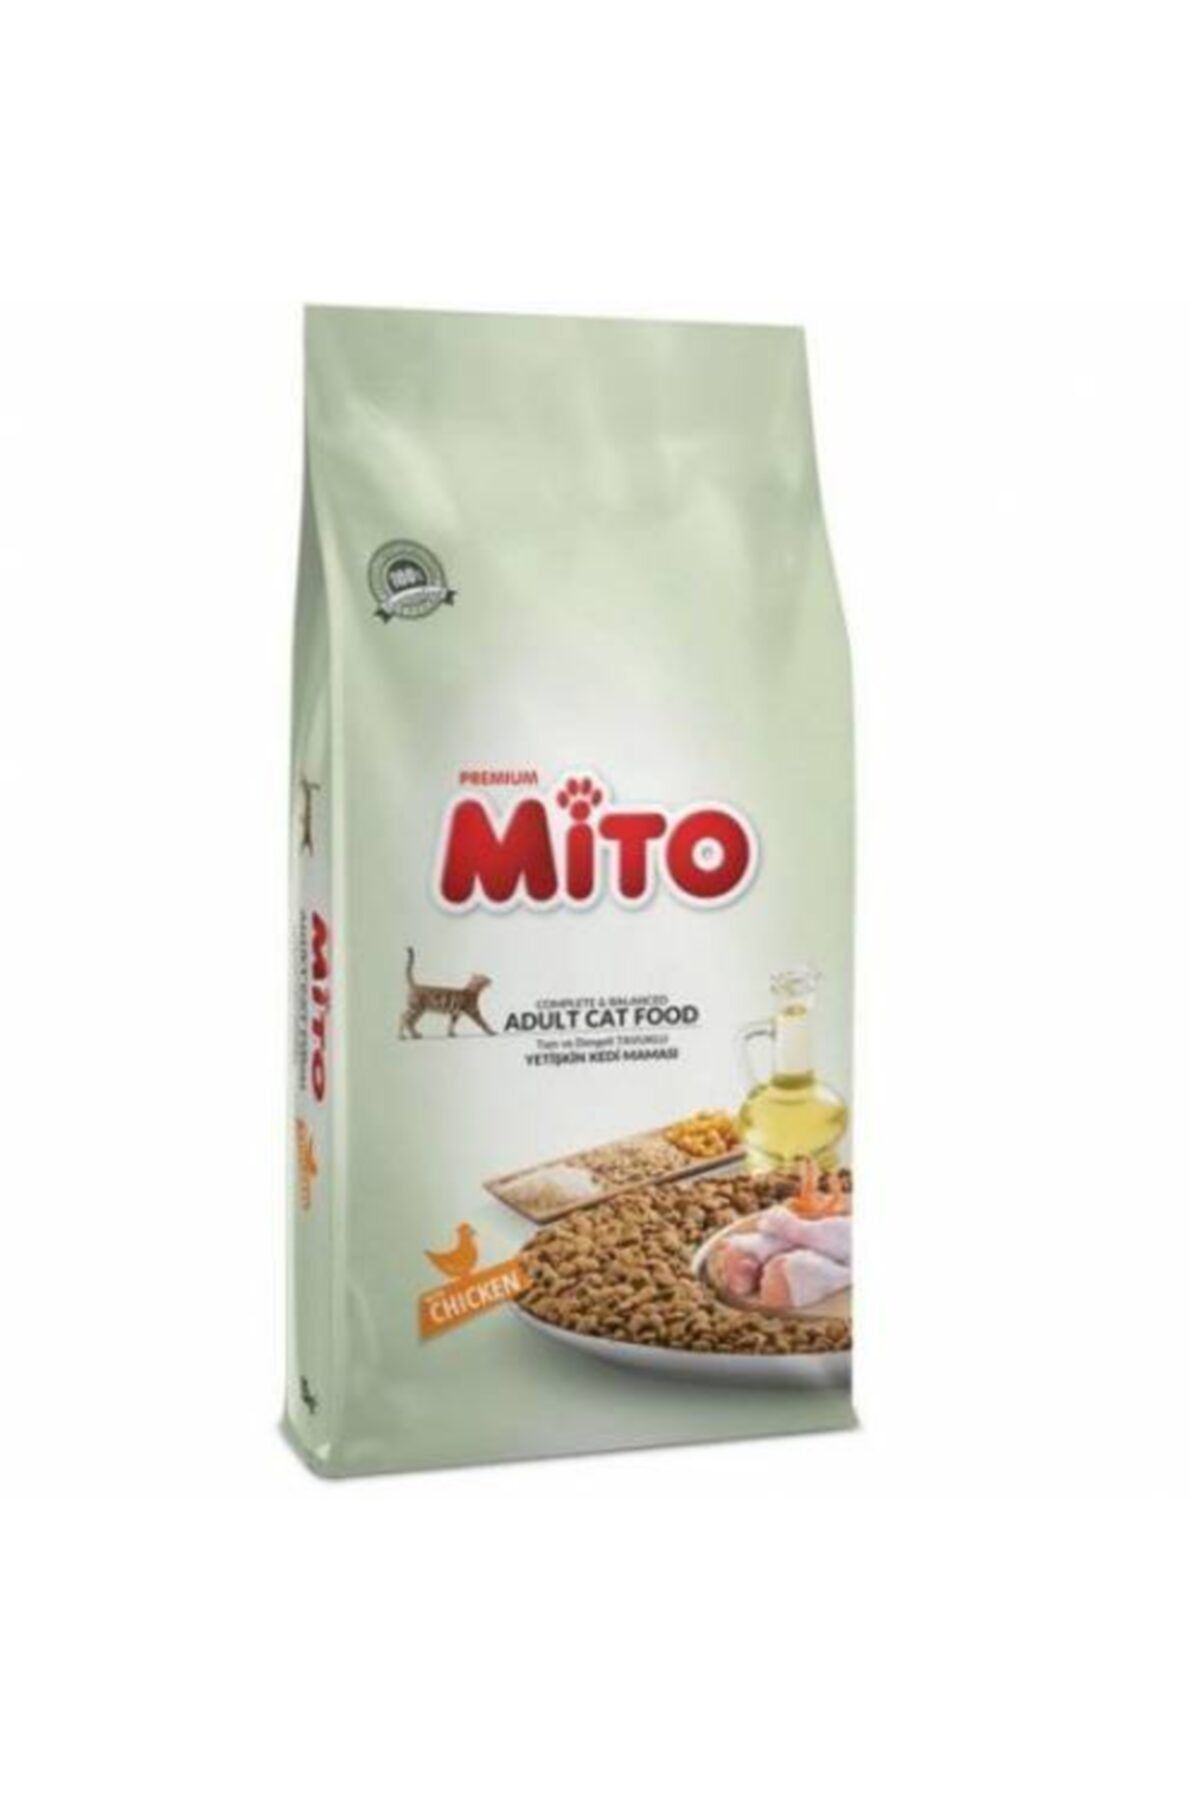 Mito Premium Tavuklu Yetişkin Kedi Maması 1kg. Bölünmüş Orijinal Ürün